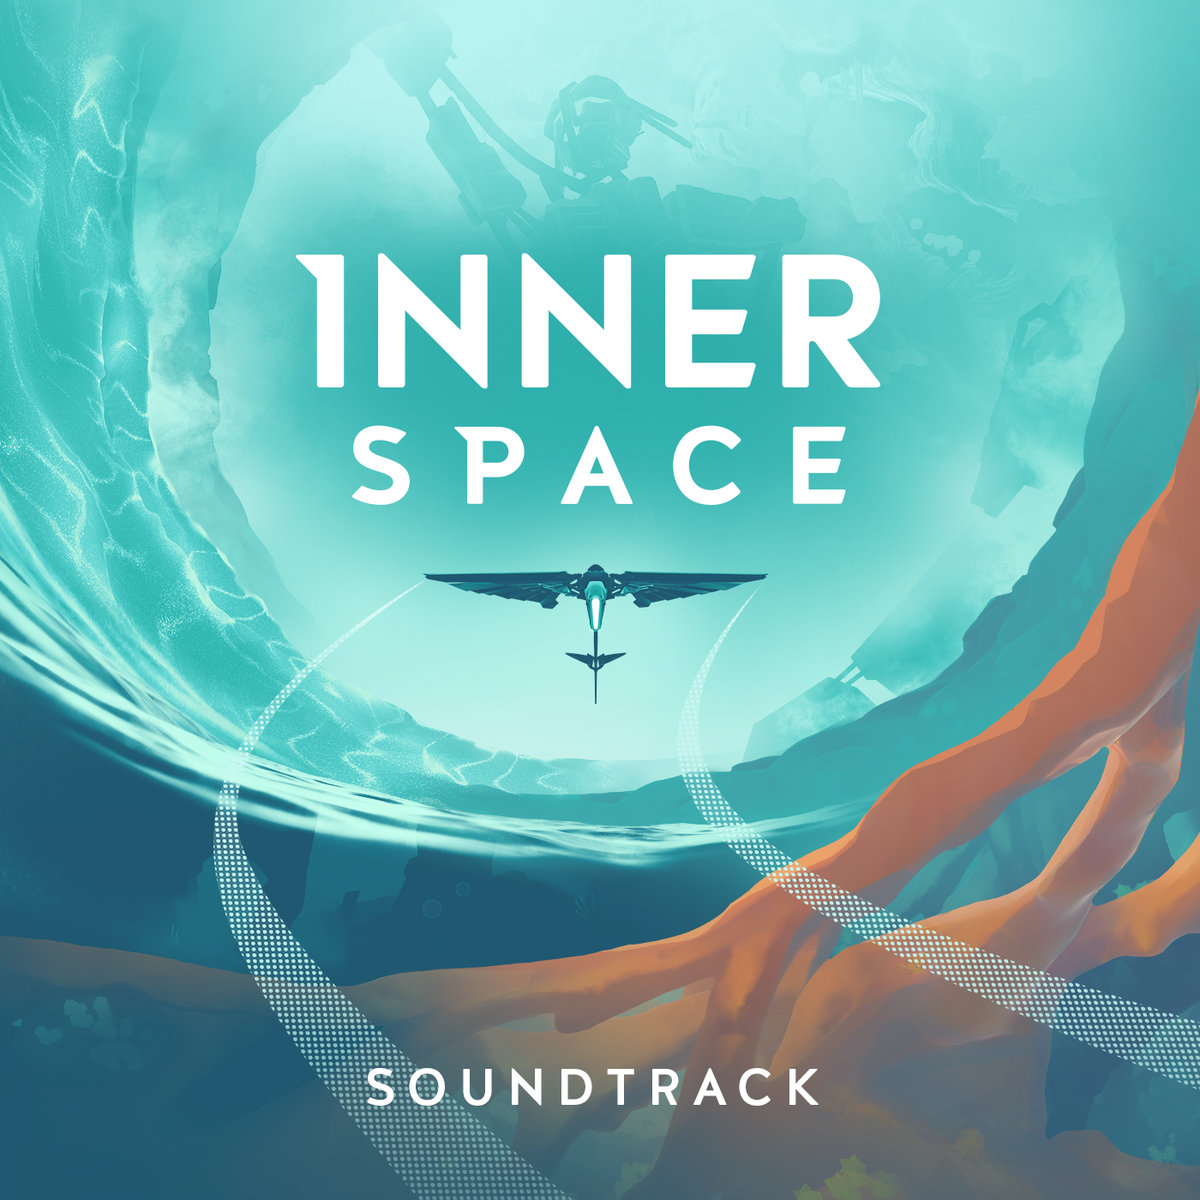 innerspace soundtrack allmusic